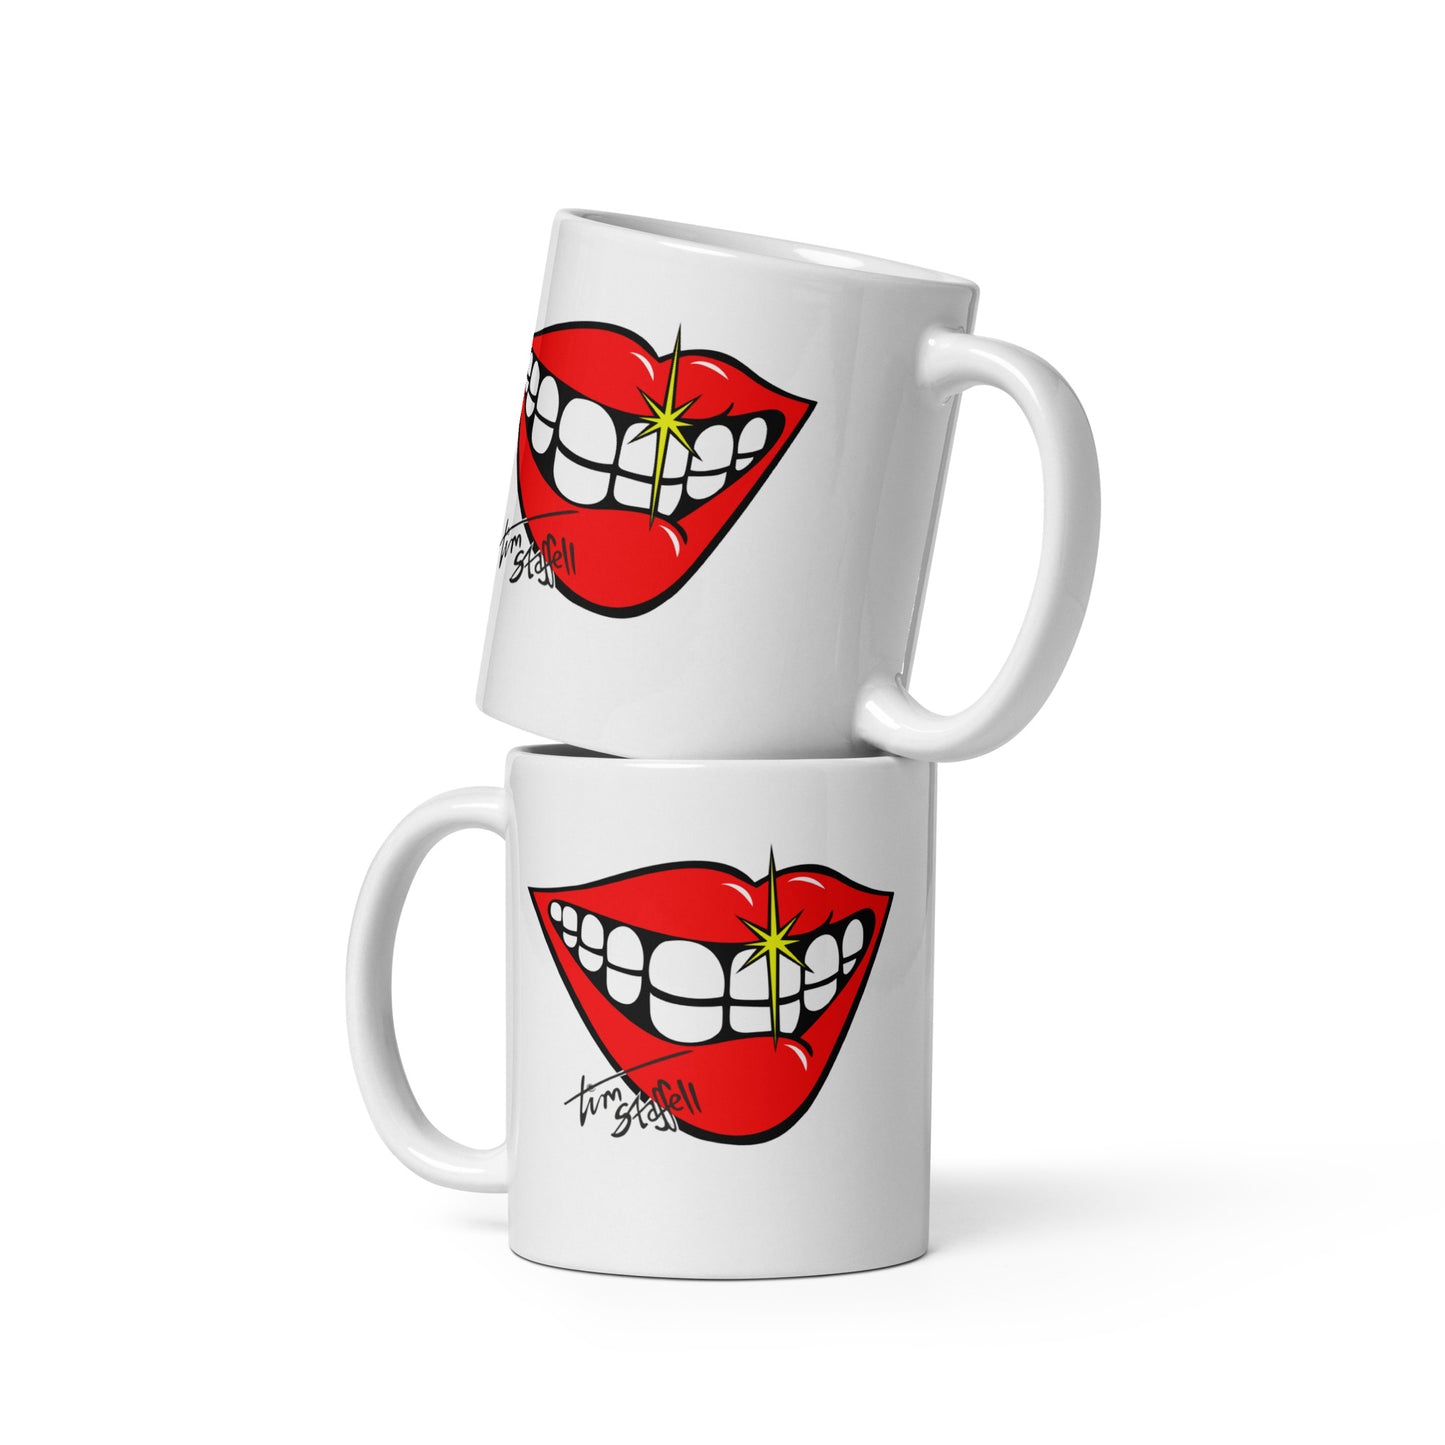 'Smile' - White glossy mug